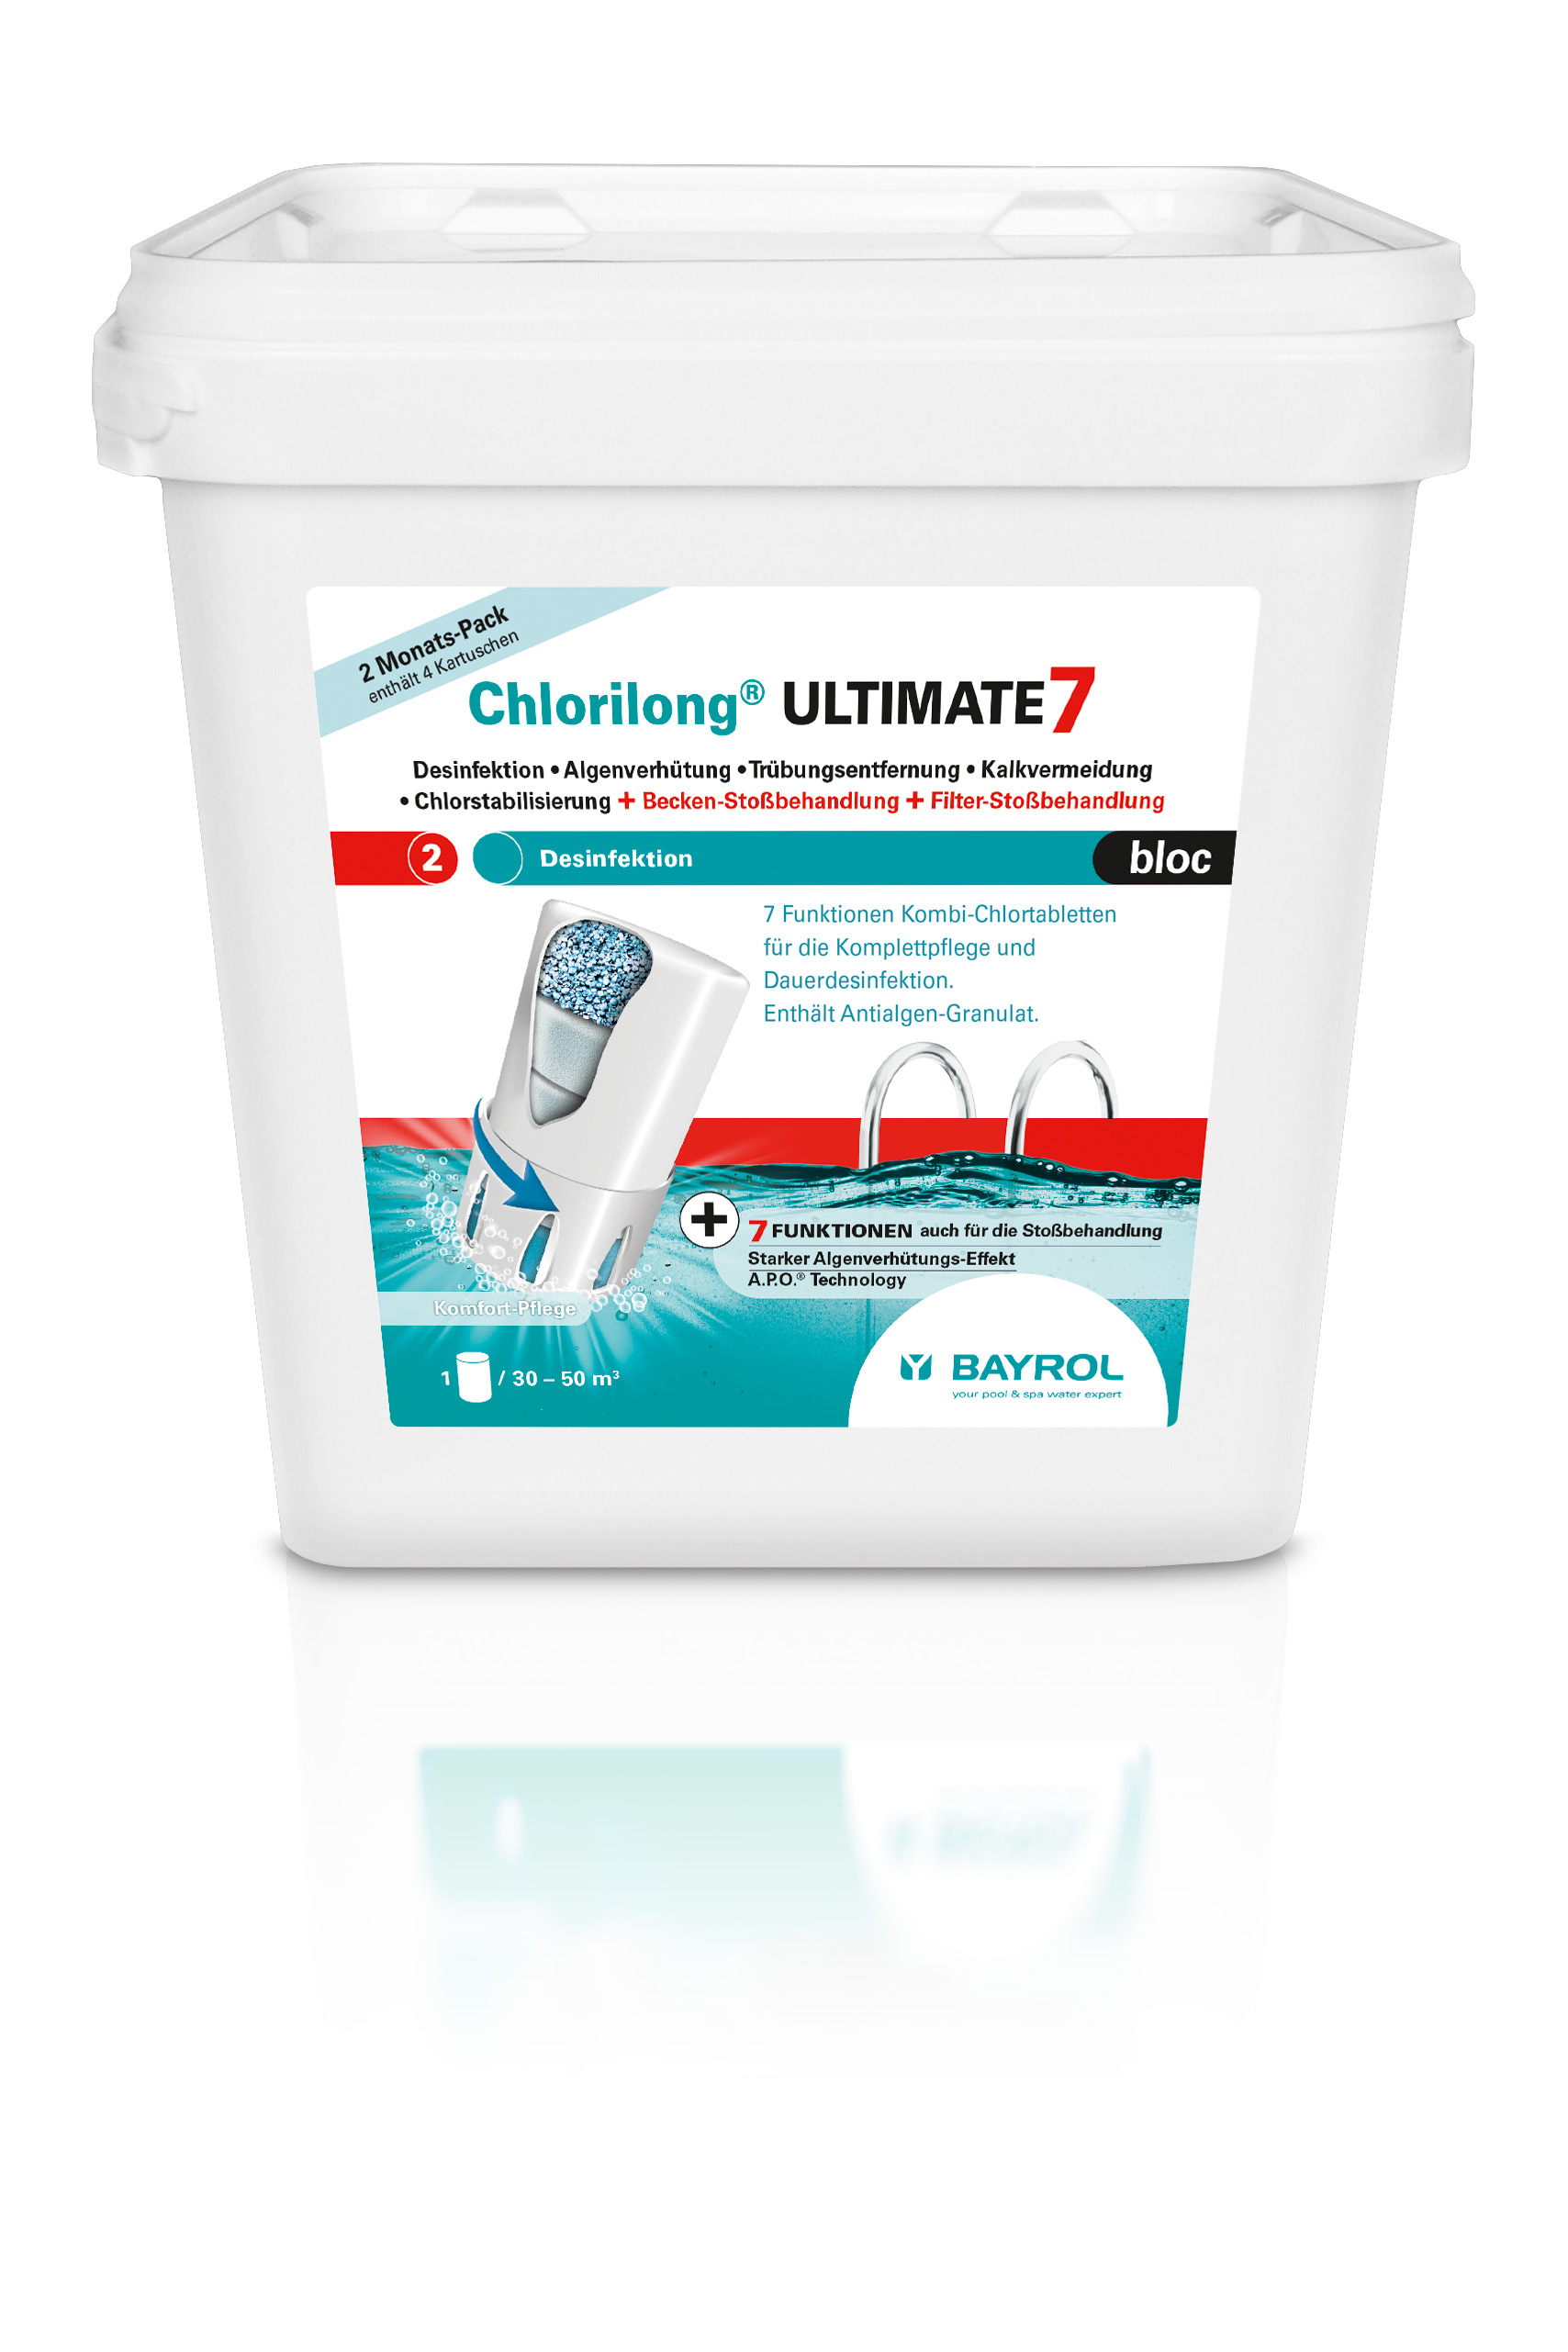 AS-021144 Chlorilong ULTIMATE 7 Bloc 3,8kg (4 Kartuschen) 7 Funktionen Kombi-Chlortabletten